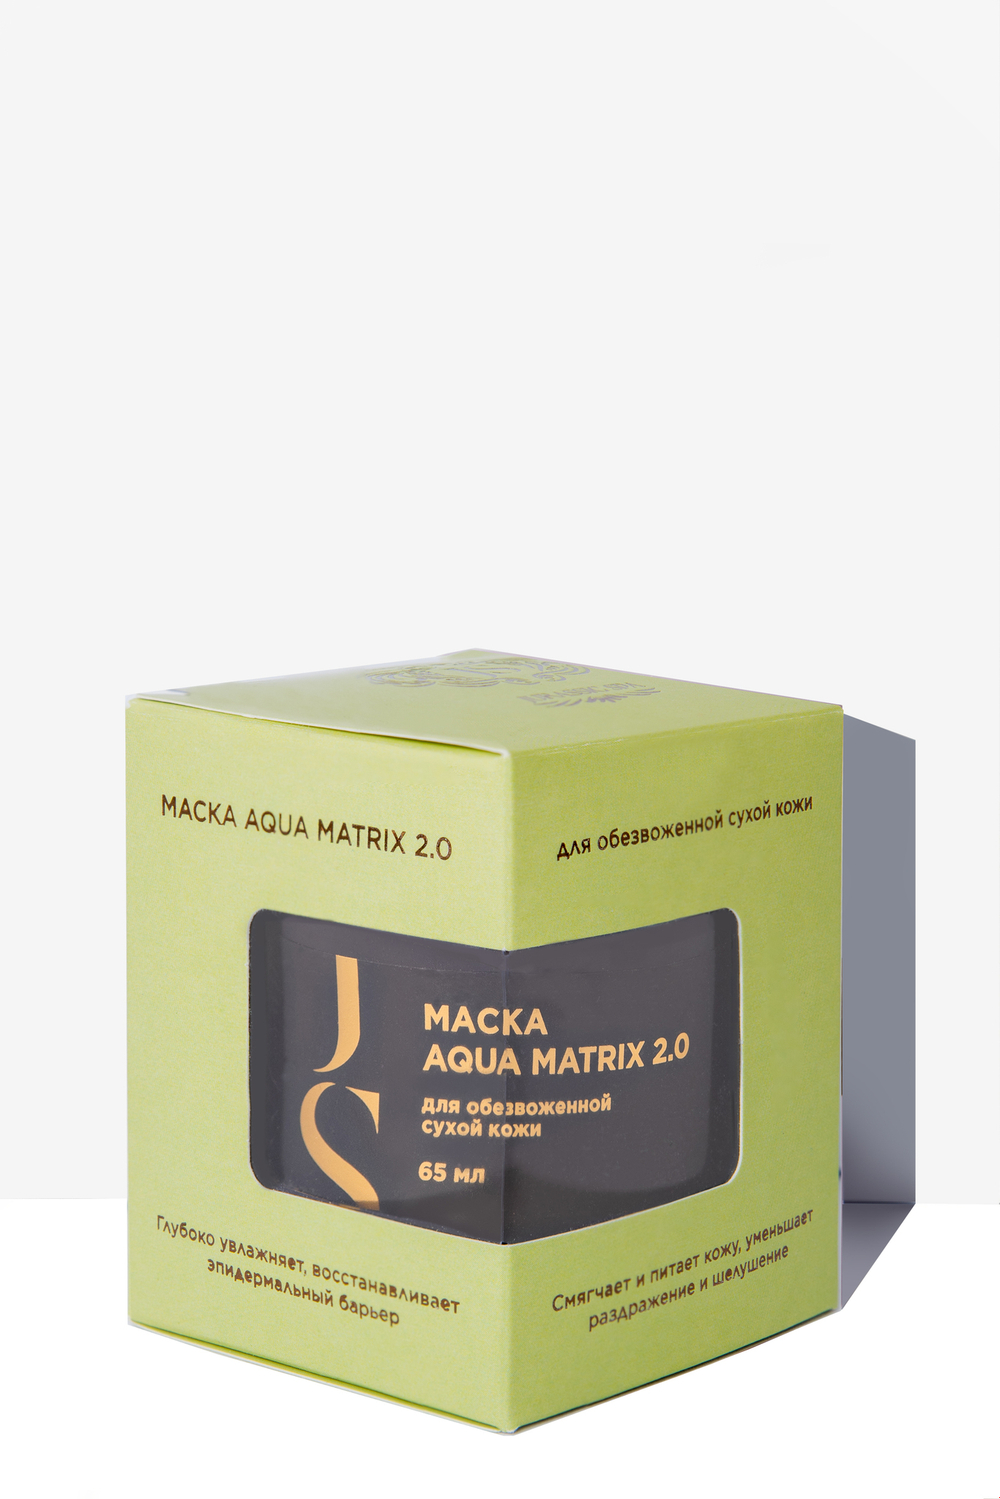 JS Маска AQUA MATRIX 2.0 (для обезвоженной сухой кожи), 65мл, Jurassic Spa